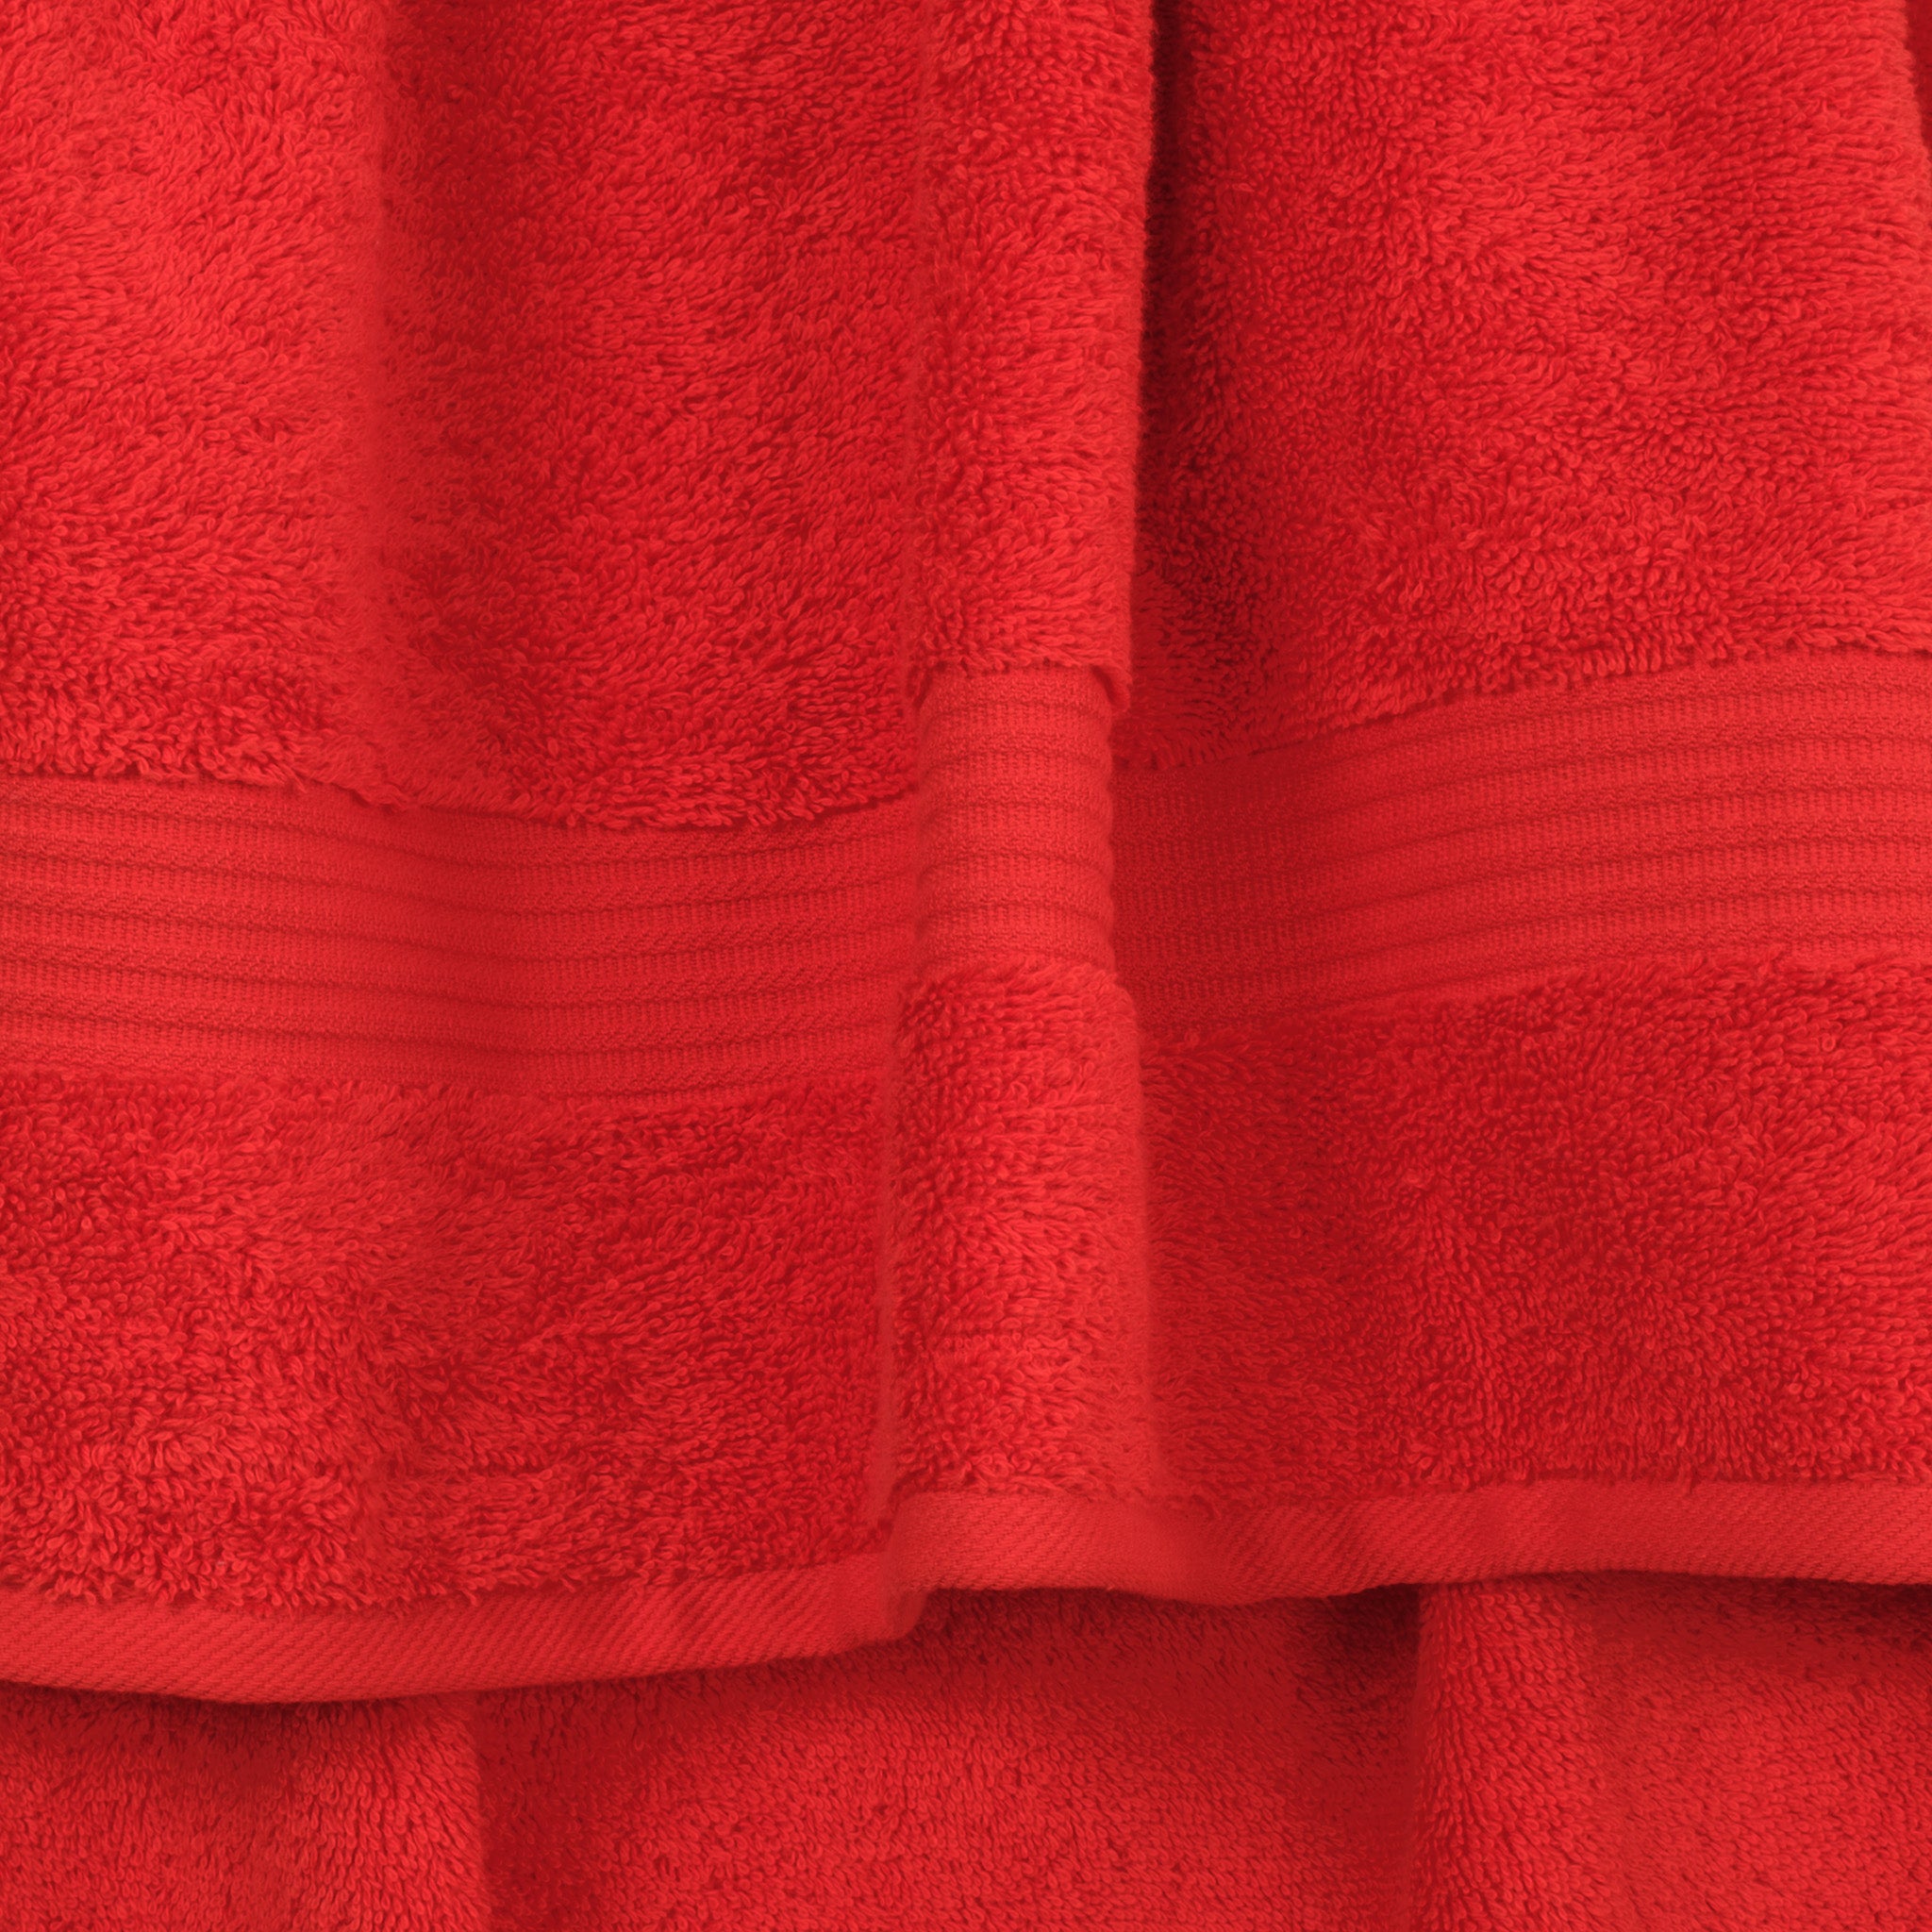 American Soft Linen Bekos 100% Cotton Turkish Towels, 4 Piece Hand Towel Set -red-03